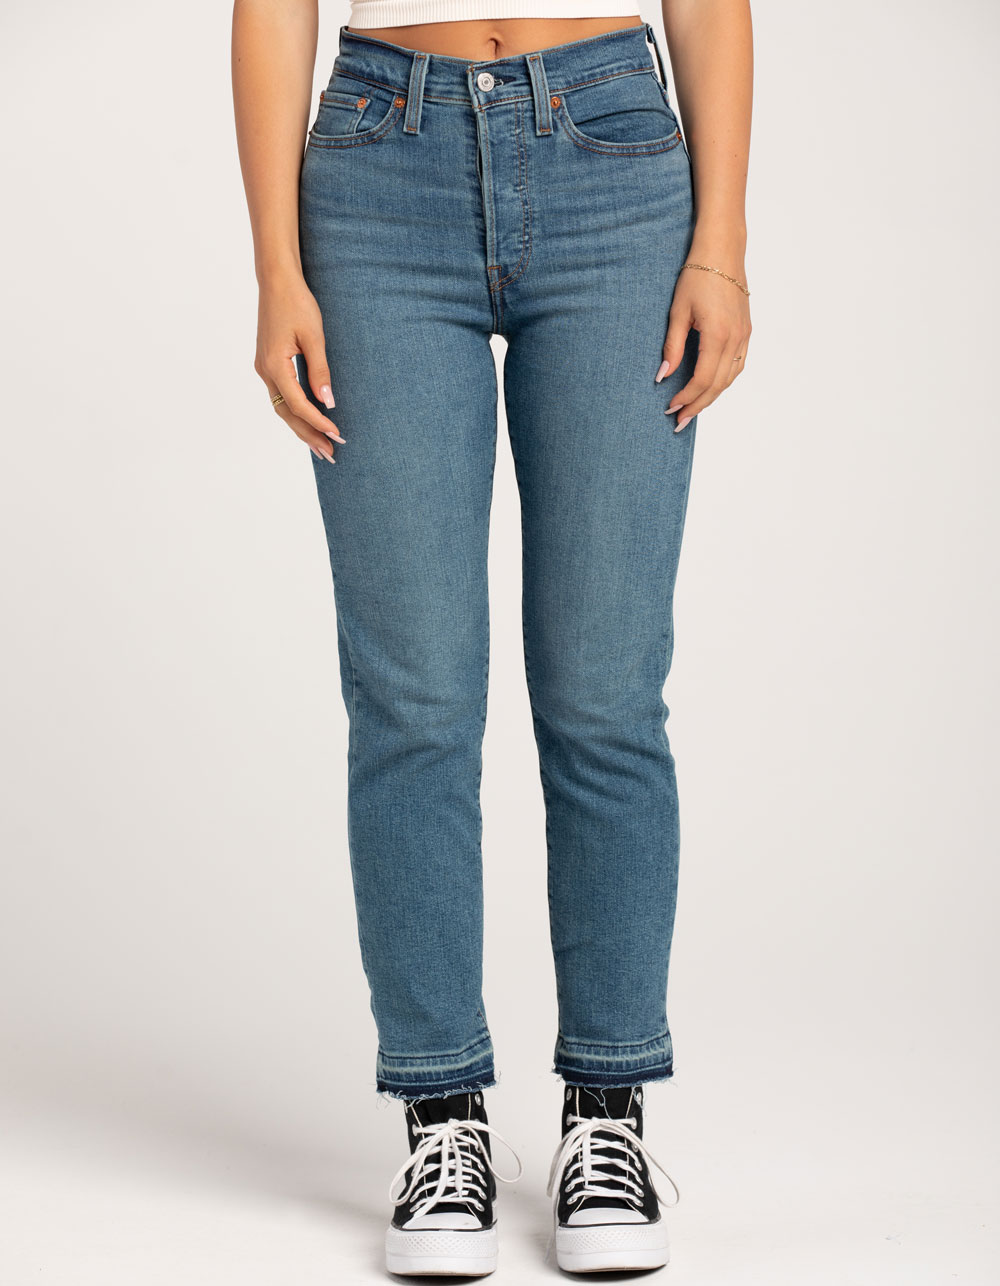 LEVI'S Wedgie Straight Womens Jeans - Turned On Me - MED BLAST | Tillys